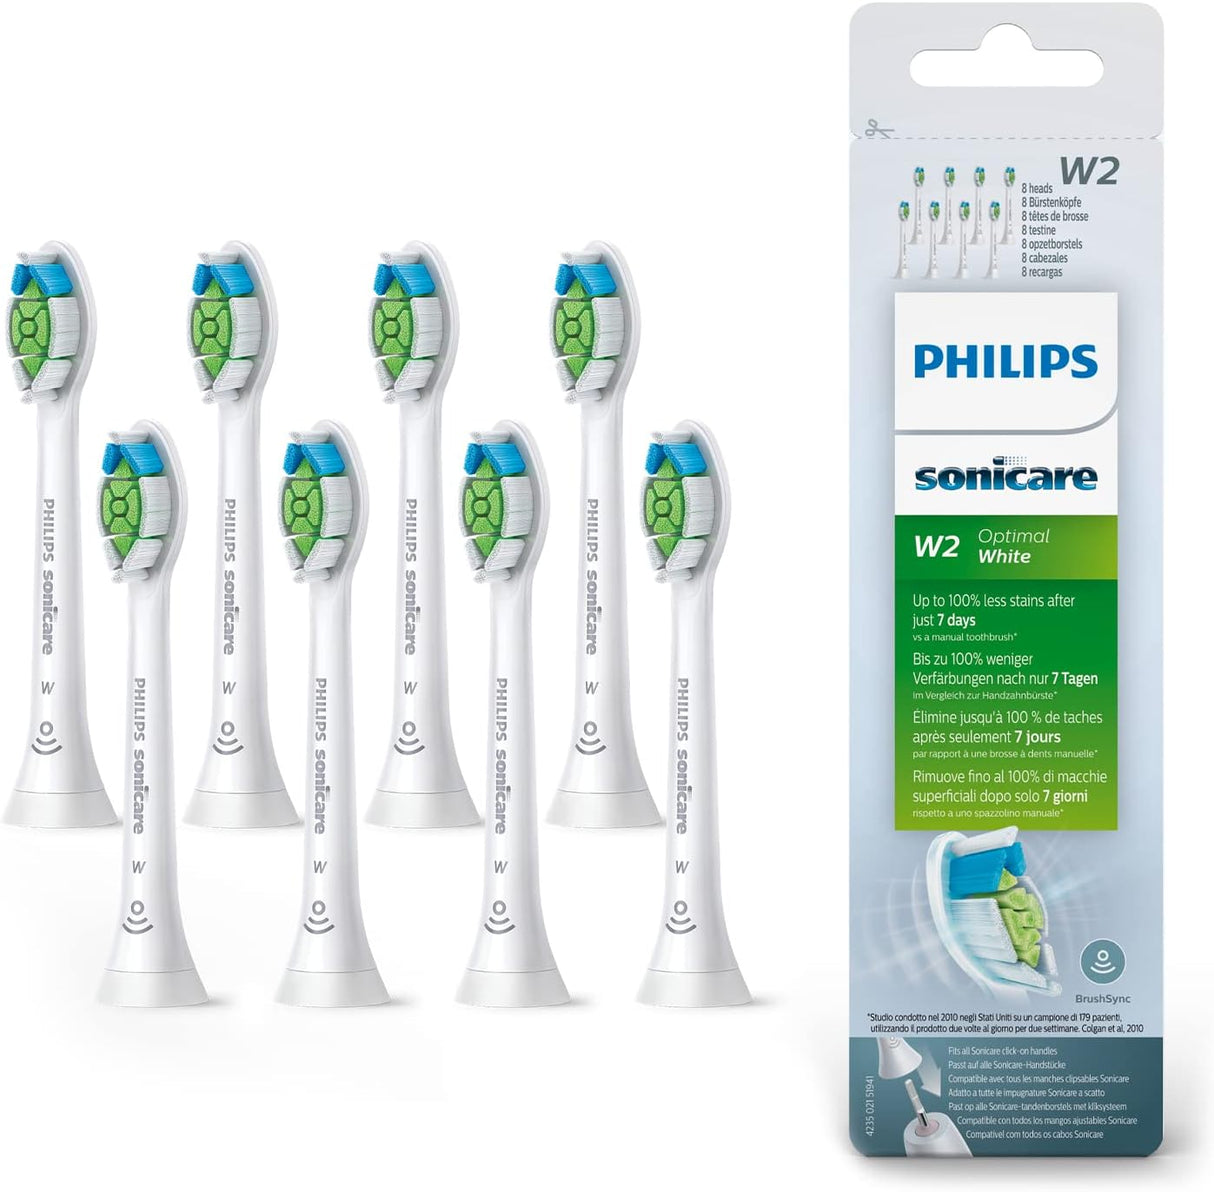 Philips Sonicare W2 Optimal White Standard Sonic Toothbrush Heads - 8 Pack in White (HX6068/12)